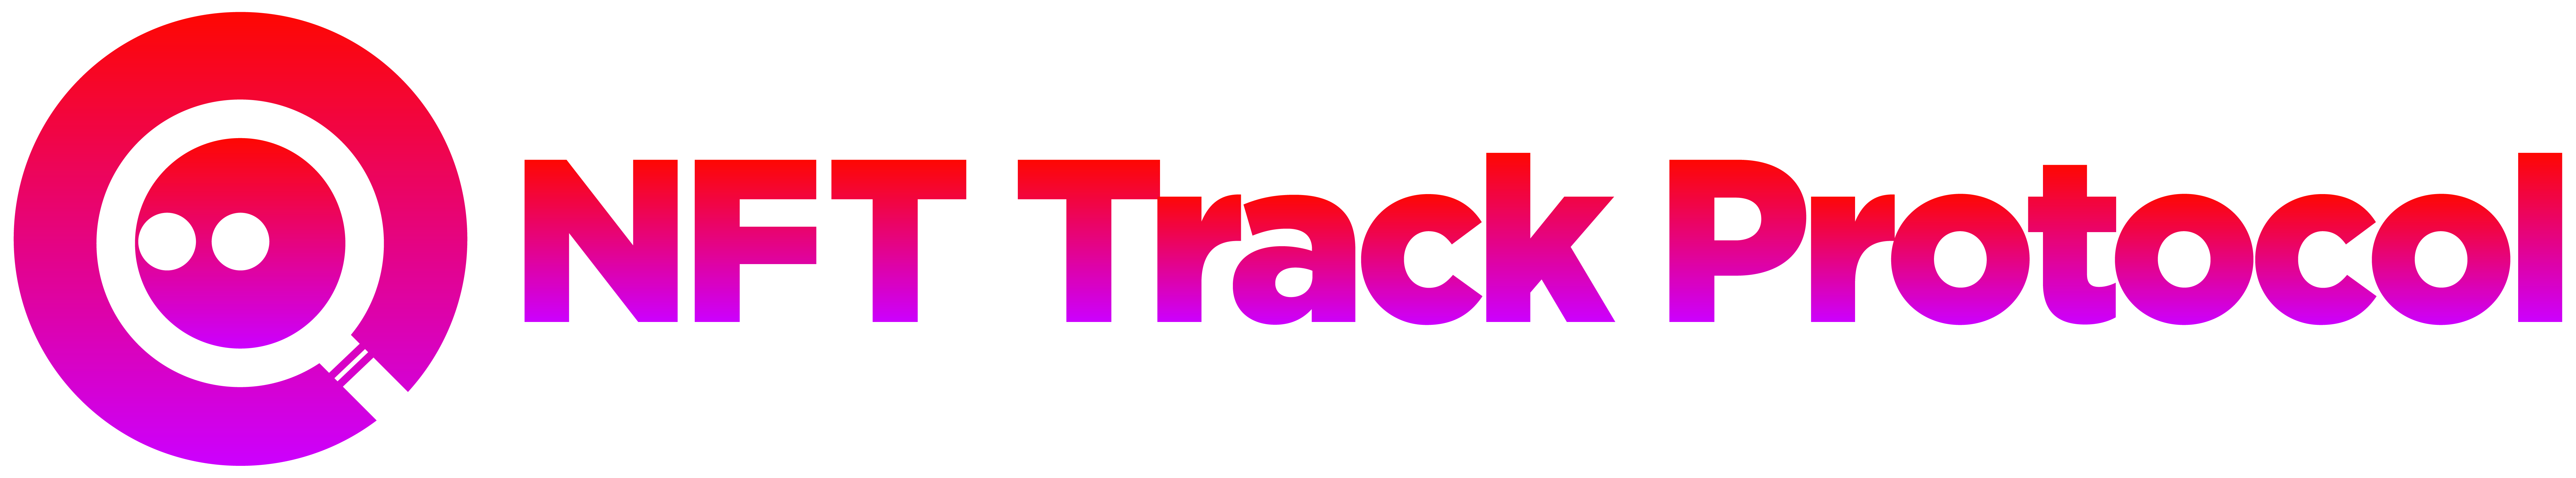 NFT Track Protocol